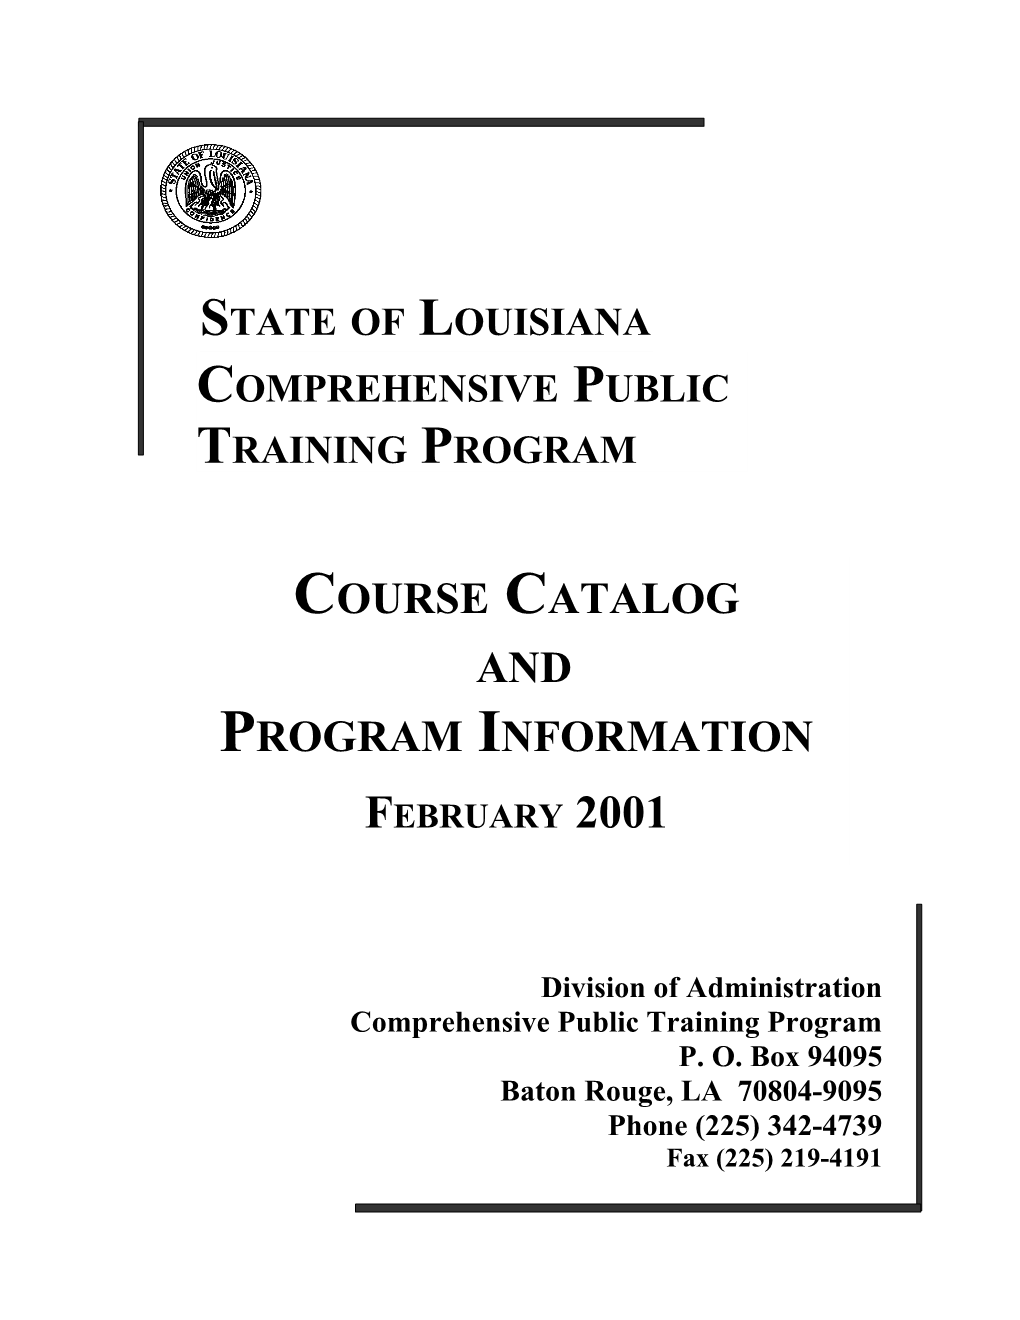 About the Comprehensive Public Training Program 1